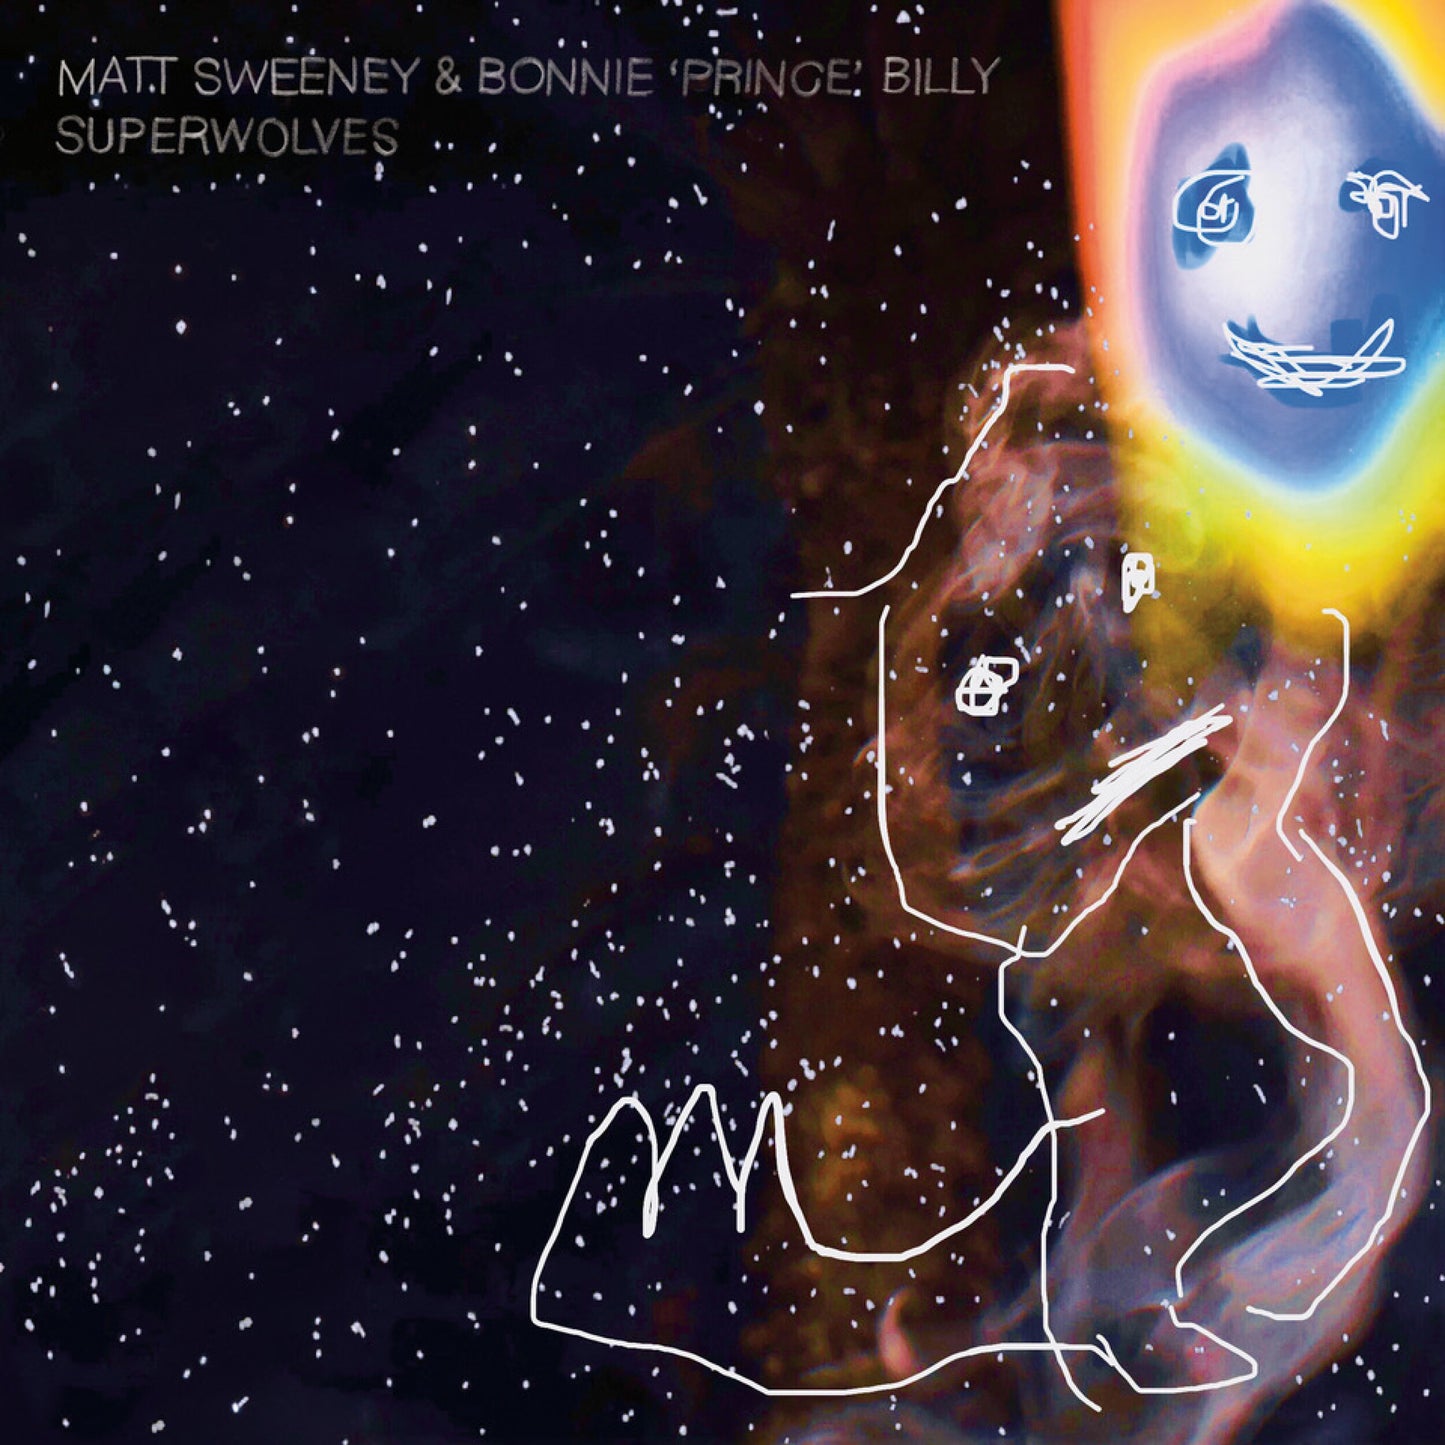 Matt Sweeney & Bonnie 'Prince' Billy - Superwolves - LP